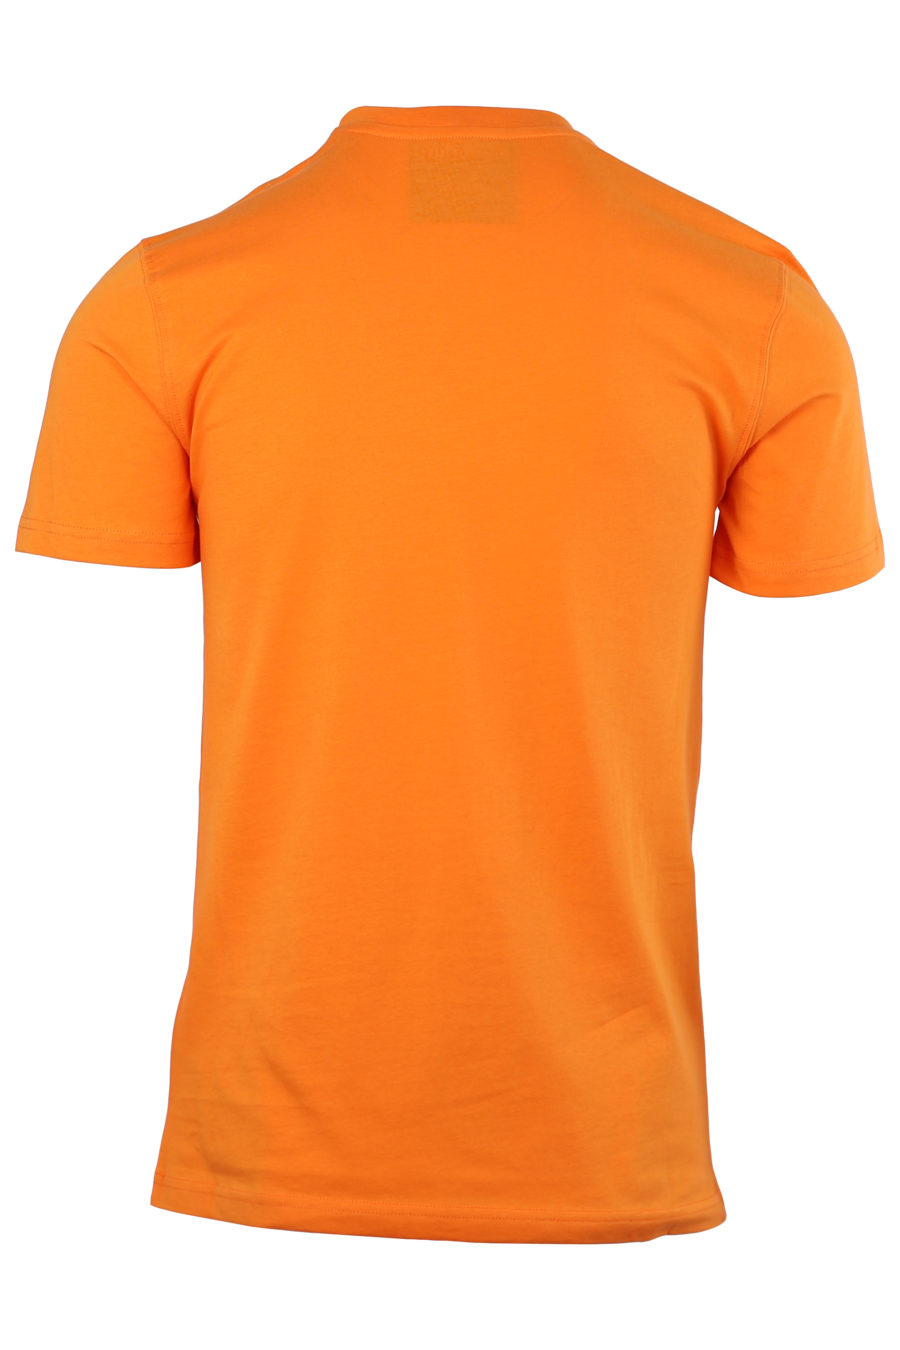 T-shirt orange "Smiley" avec logo brodé - IMG 9983